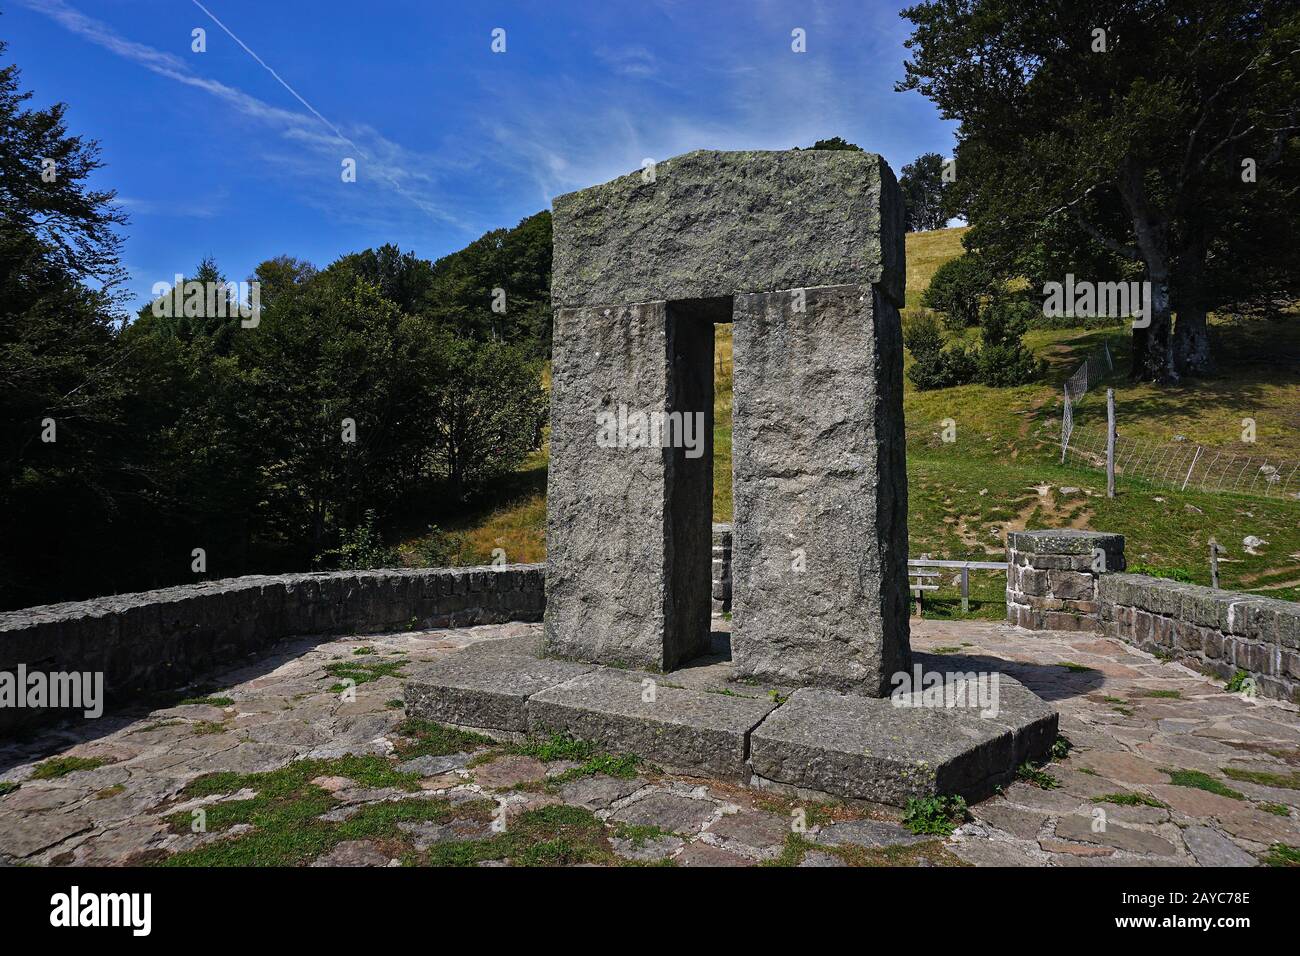 Monumento inglese a Schauinsland nella Foresta Nera, Germania meridionale Foto Stock